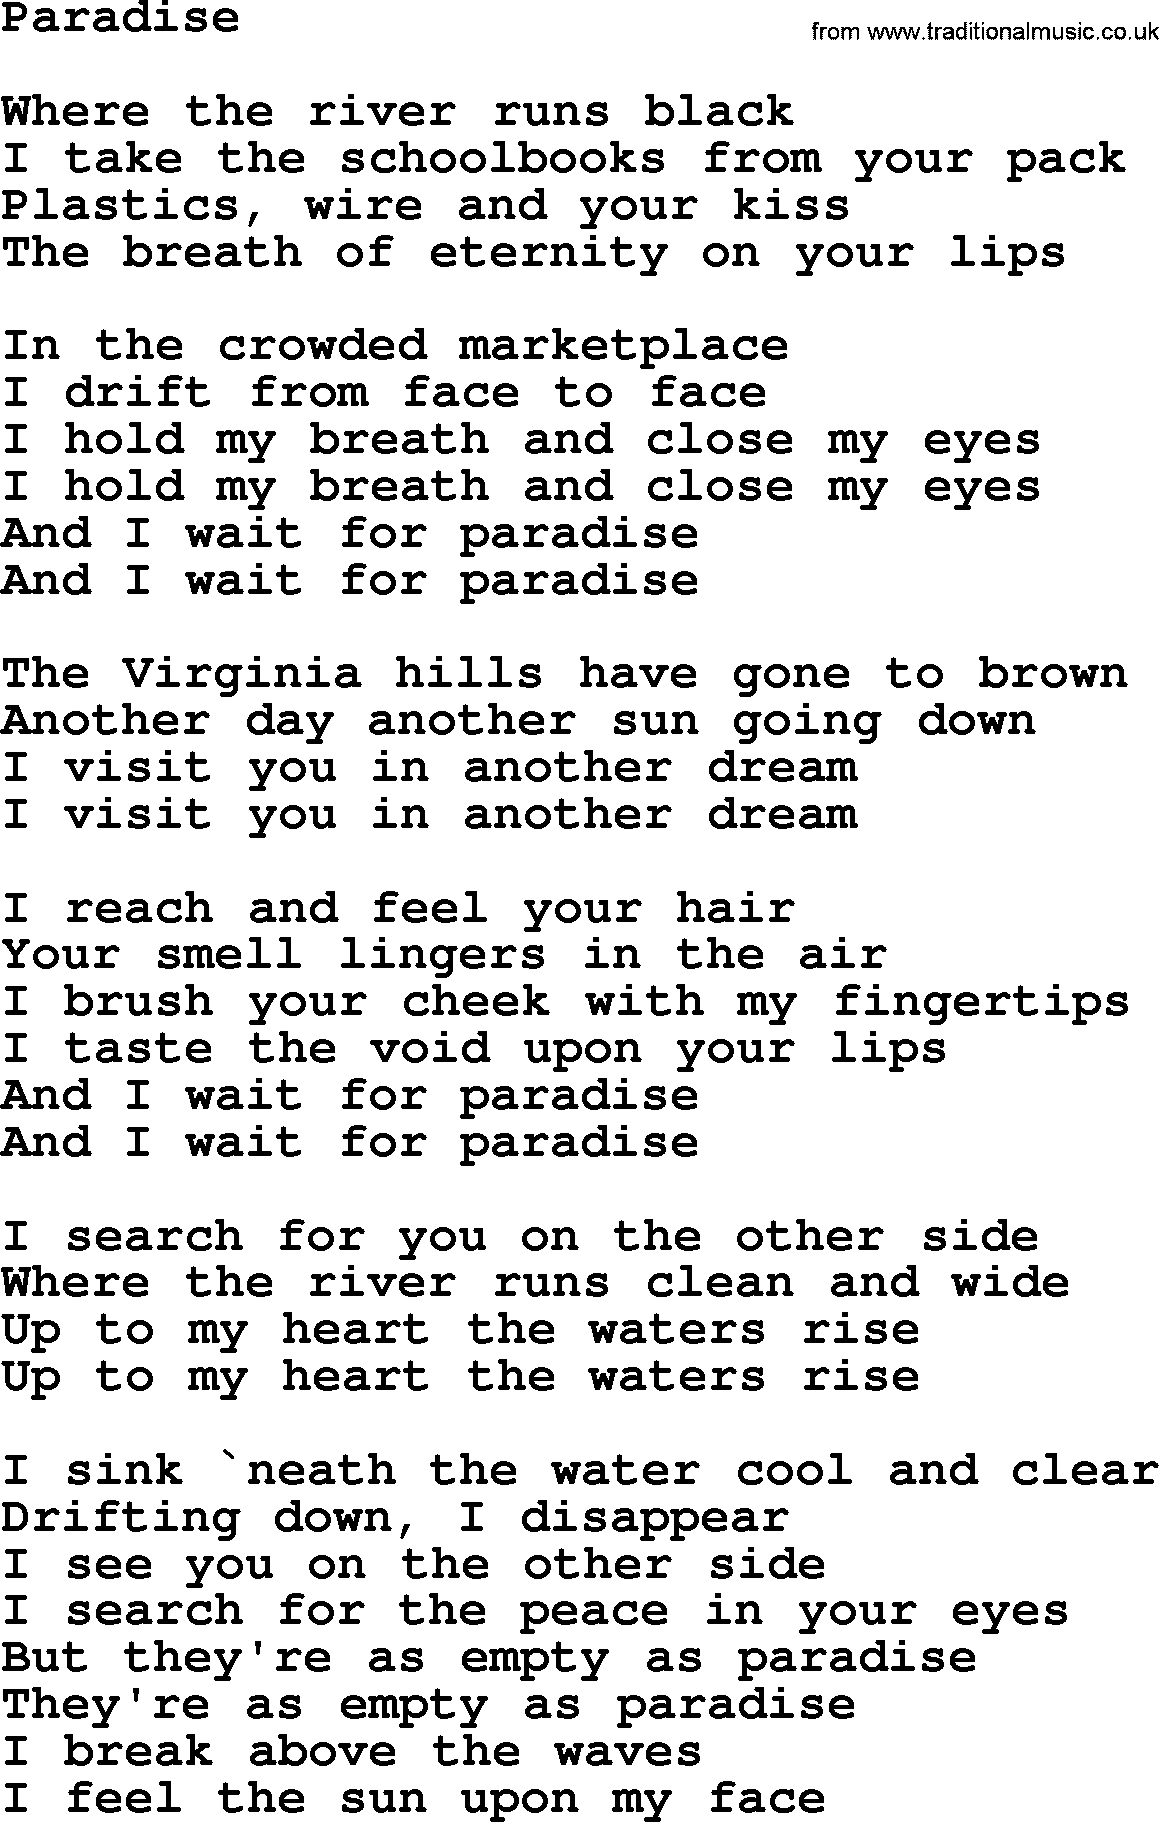 Bruce Springsteen song: Paradise lyrics